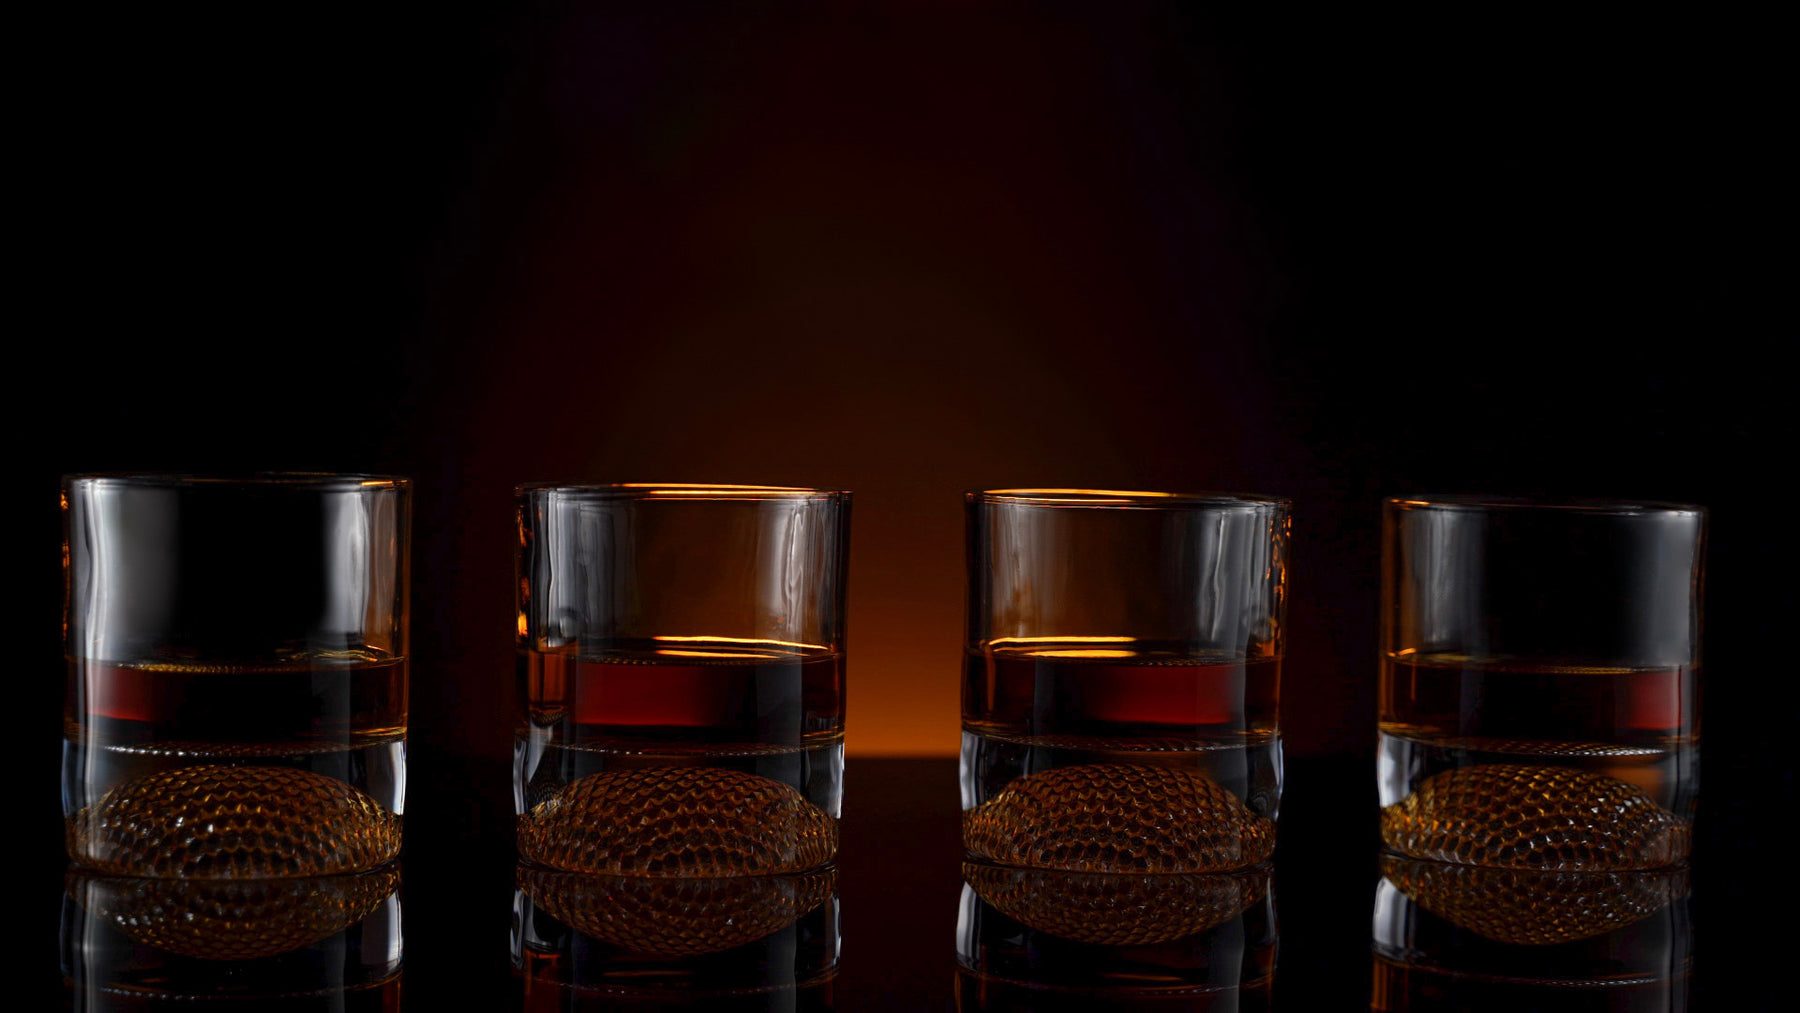 Luxurious Golf Whiskey Bar Gift Set